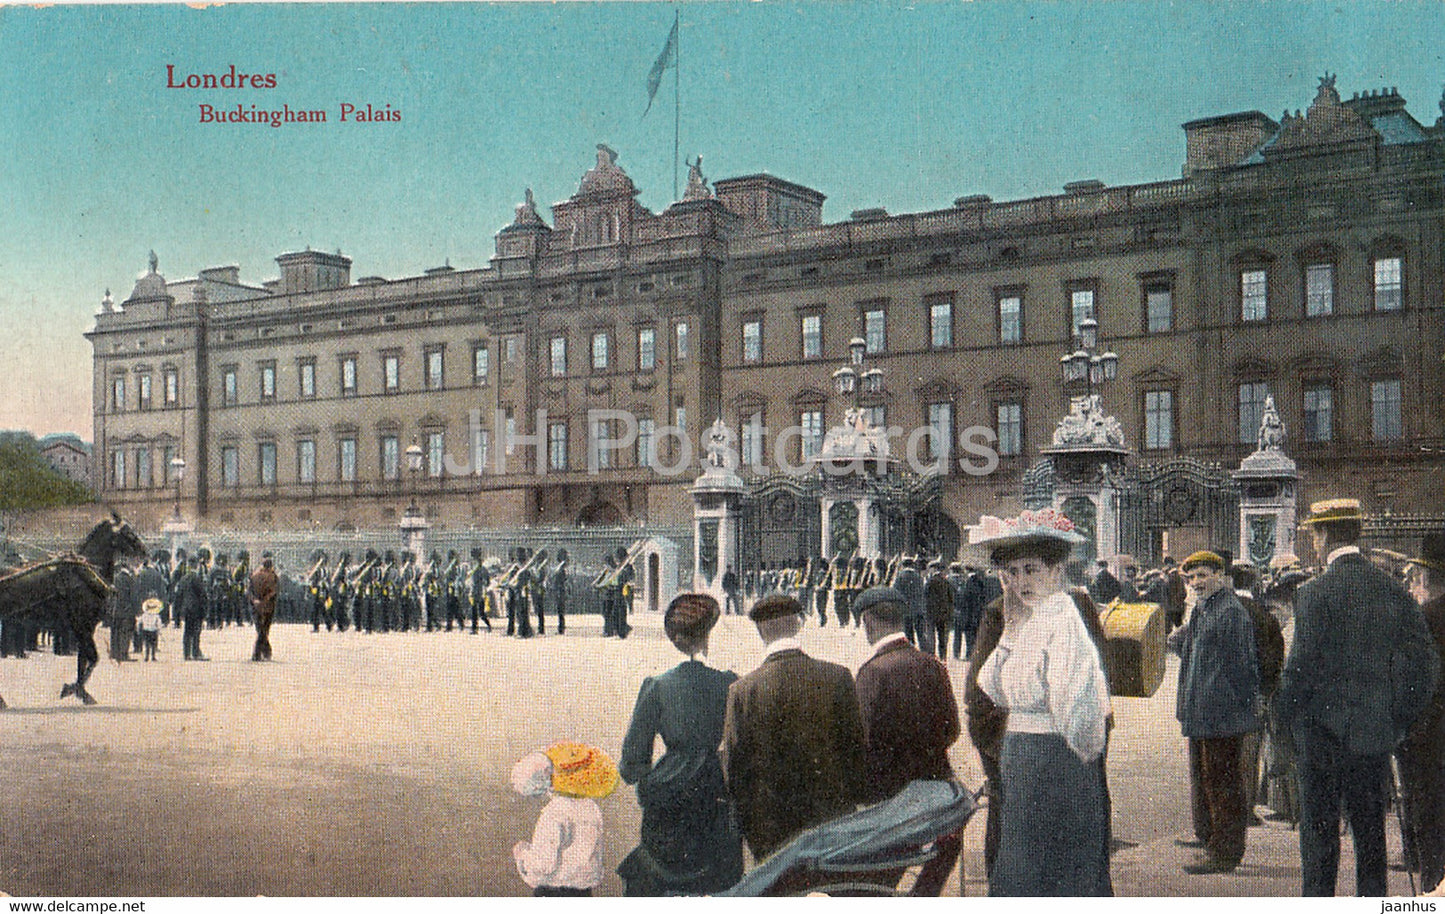 London - Buckingham Palace - Londres - palais - Feldpost - old postcard - 1916 - England - United Kingdom - used - JH Postcards